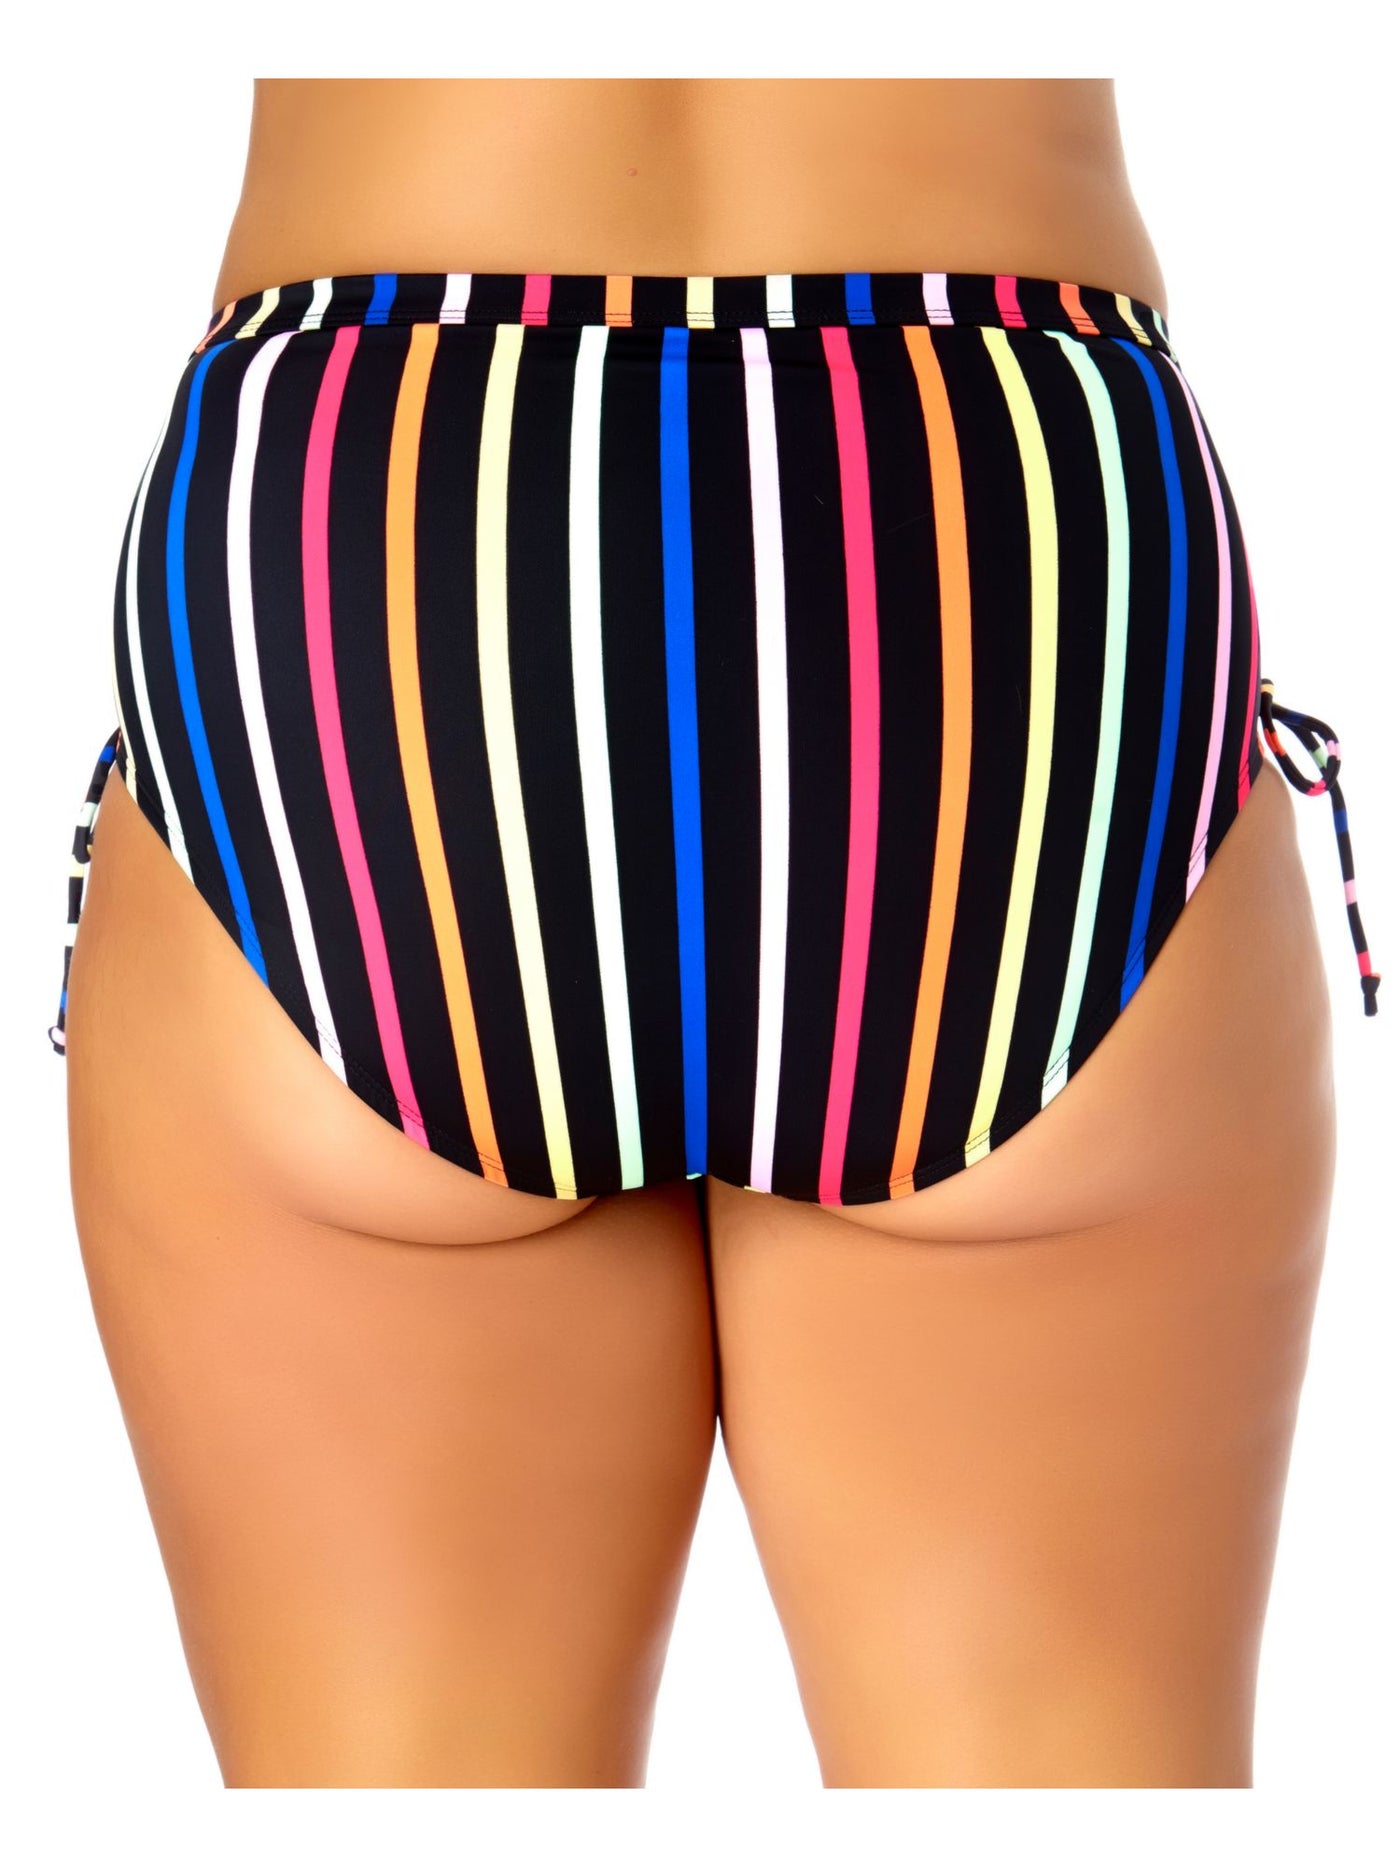 CALIFORNIA SUNSHINE Women's Black Colorblocked Stripe Stretch Lace-Up Bikini Moderate Coverage Tie High Waisted Swimsuit Bottom 3X